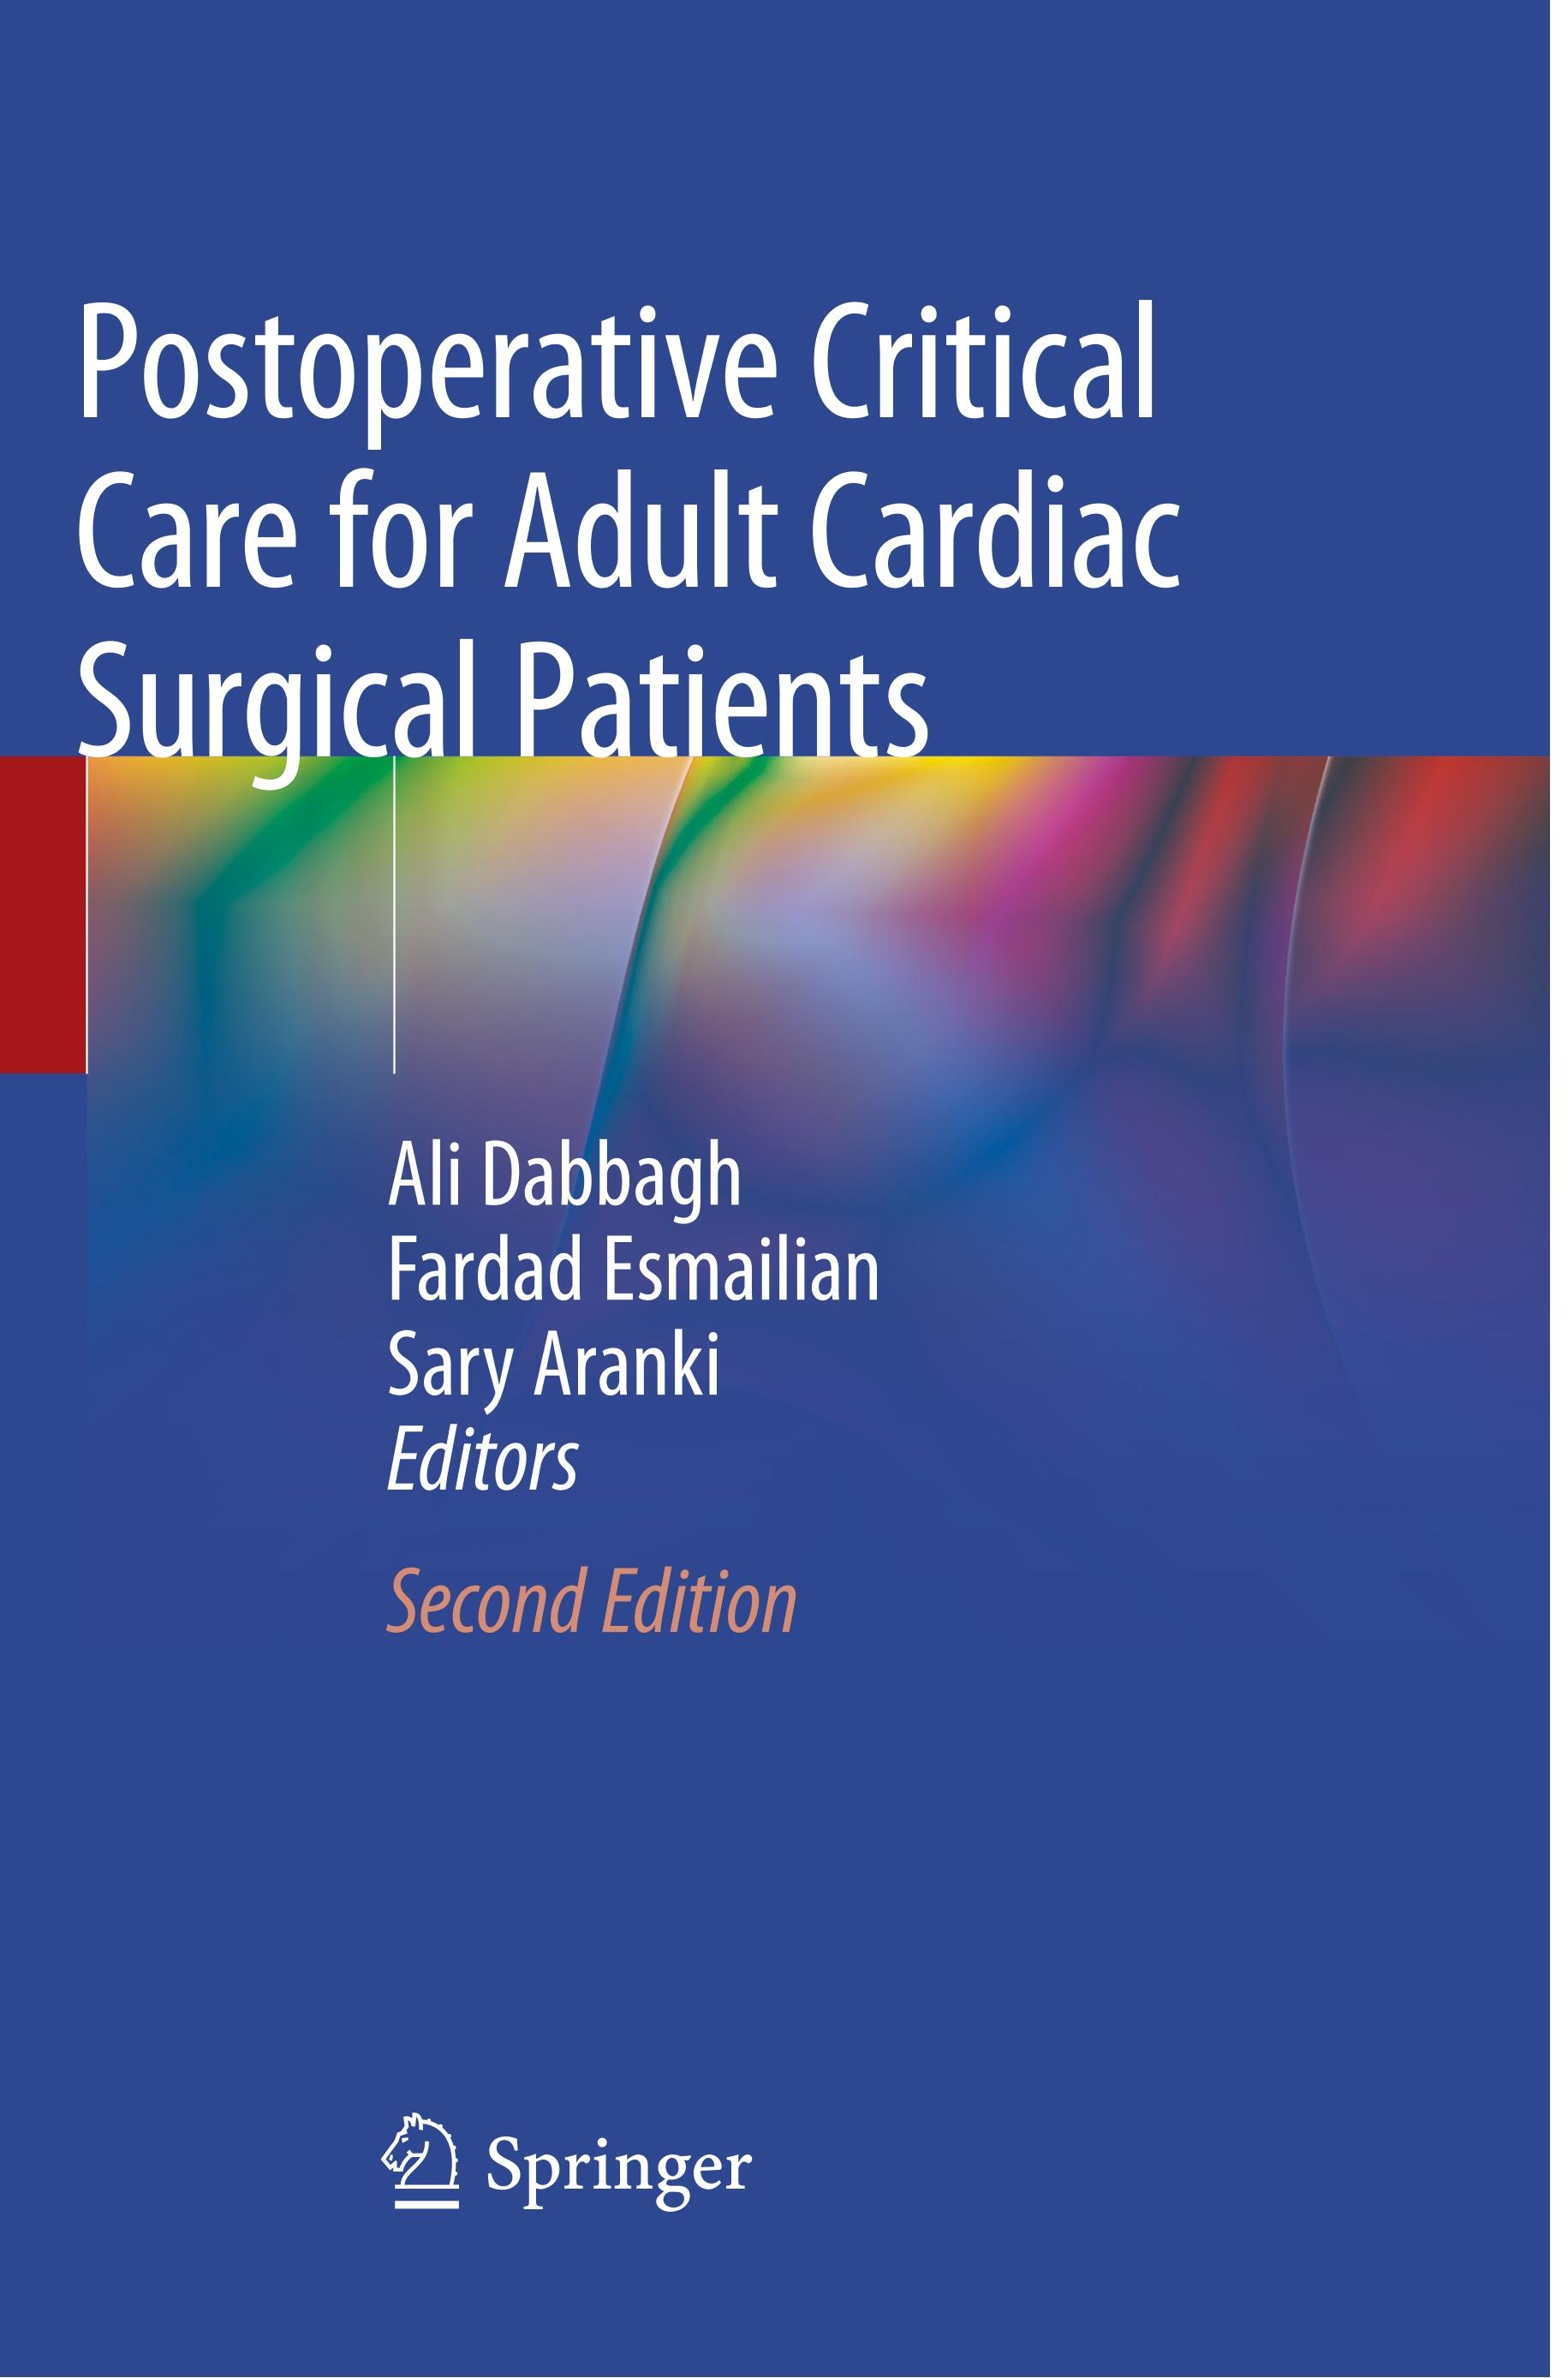 Postoperative Critical Care for Adult Cardiac Surgical Patients - Dabbagh, Ali|Esmailian, Fardad|Aranki, Sary